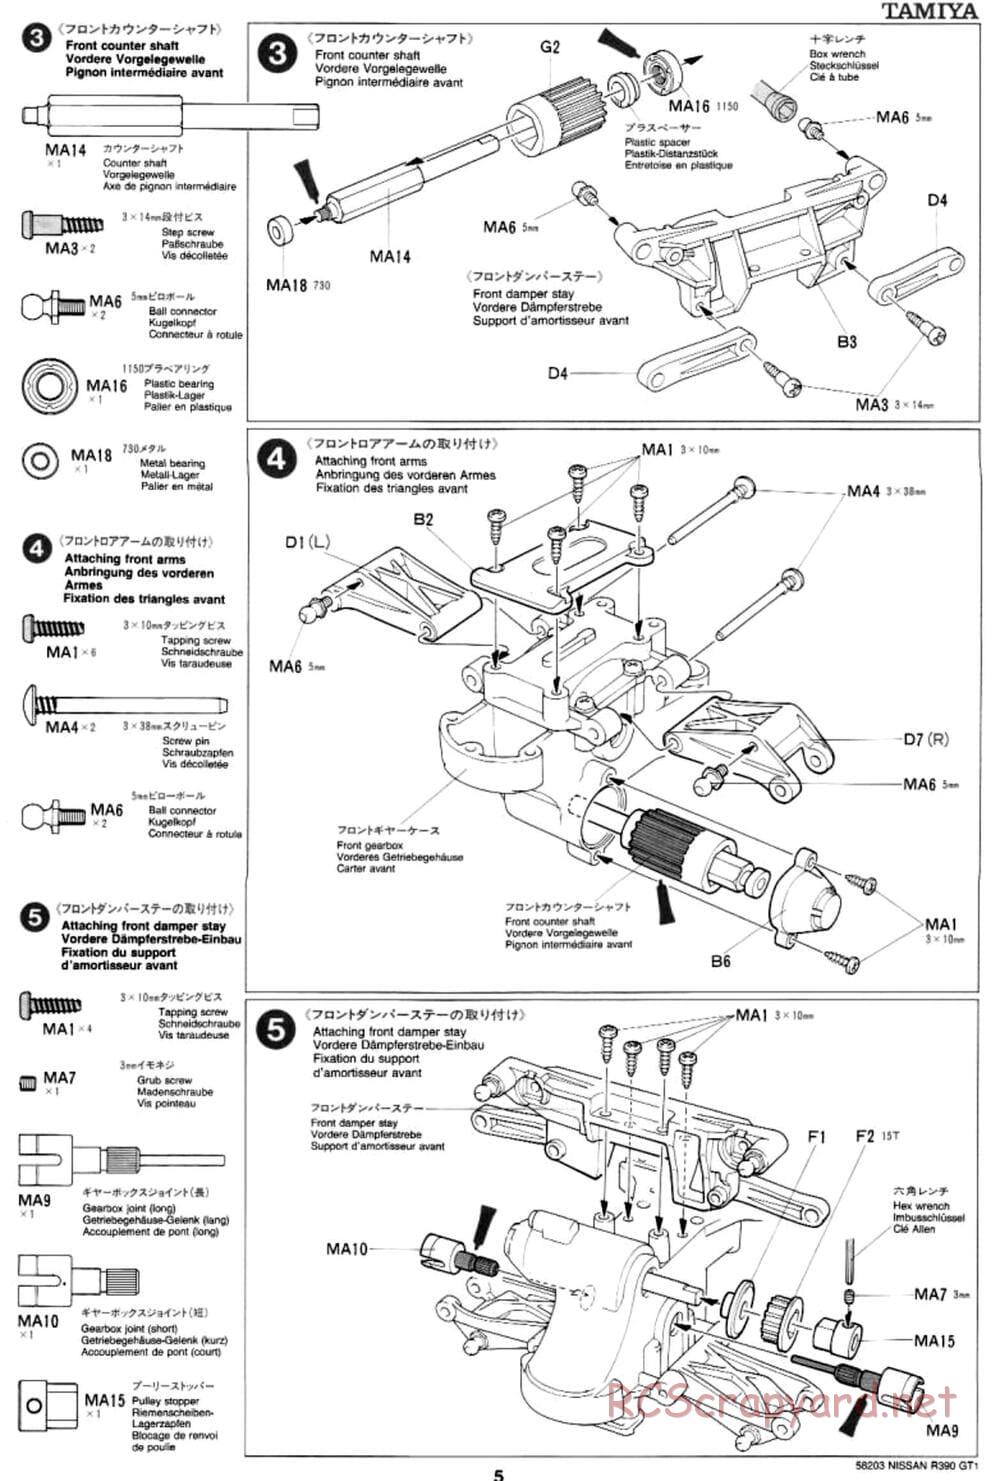 Tamiya - 58203 - Manual • Nissan R390 GT1 - TA-03R • RCScrapyard ...